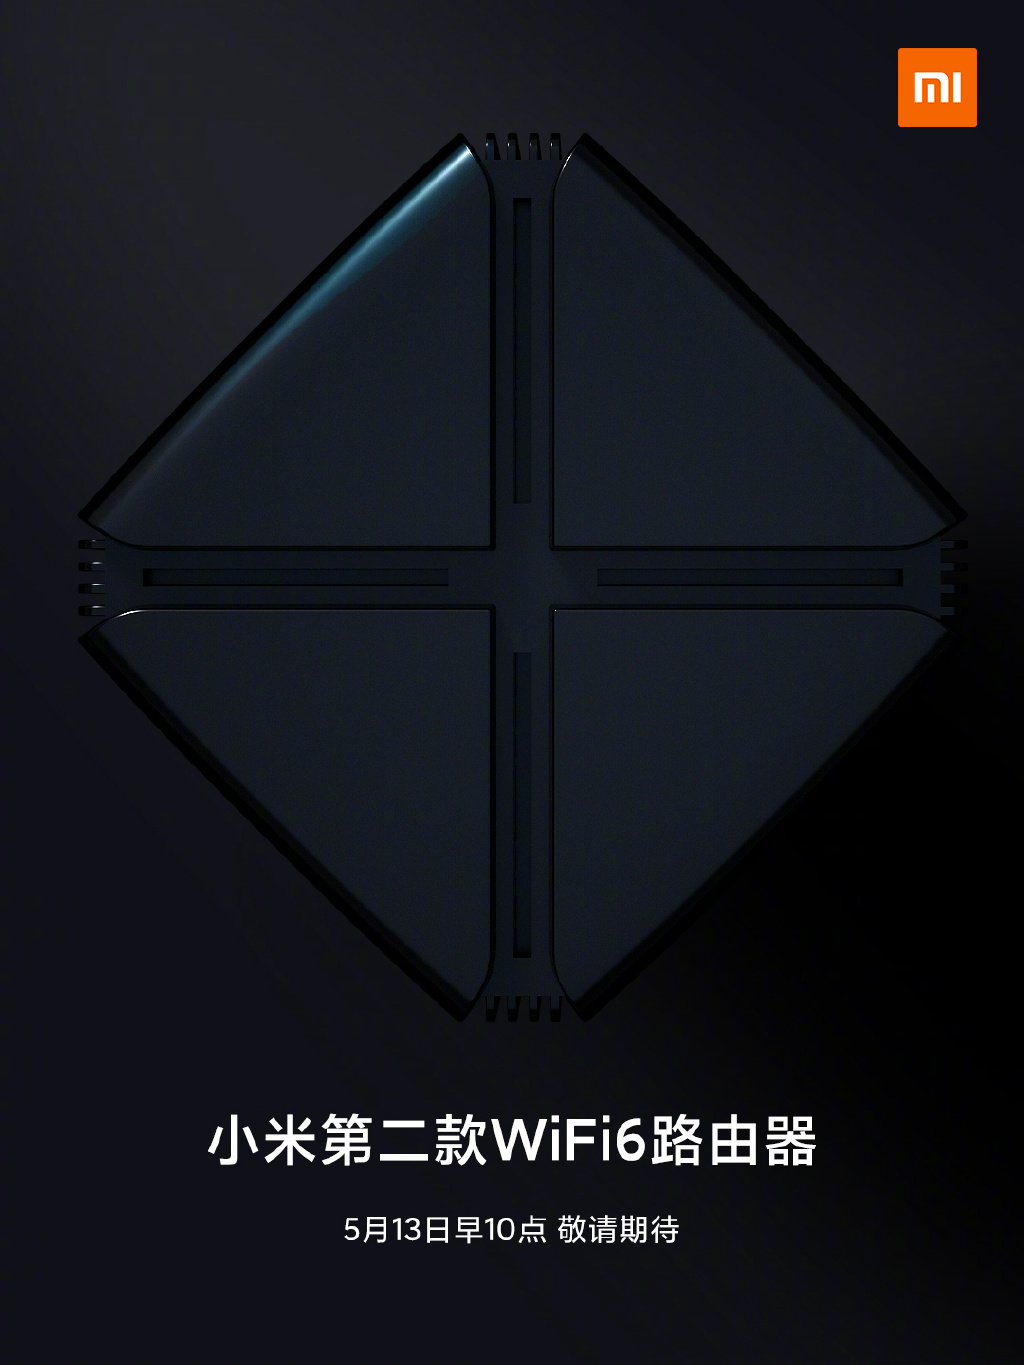 xiaomi-wifi6-2.jpg